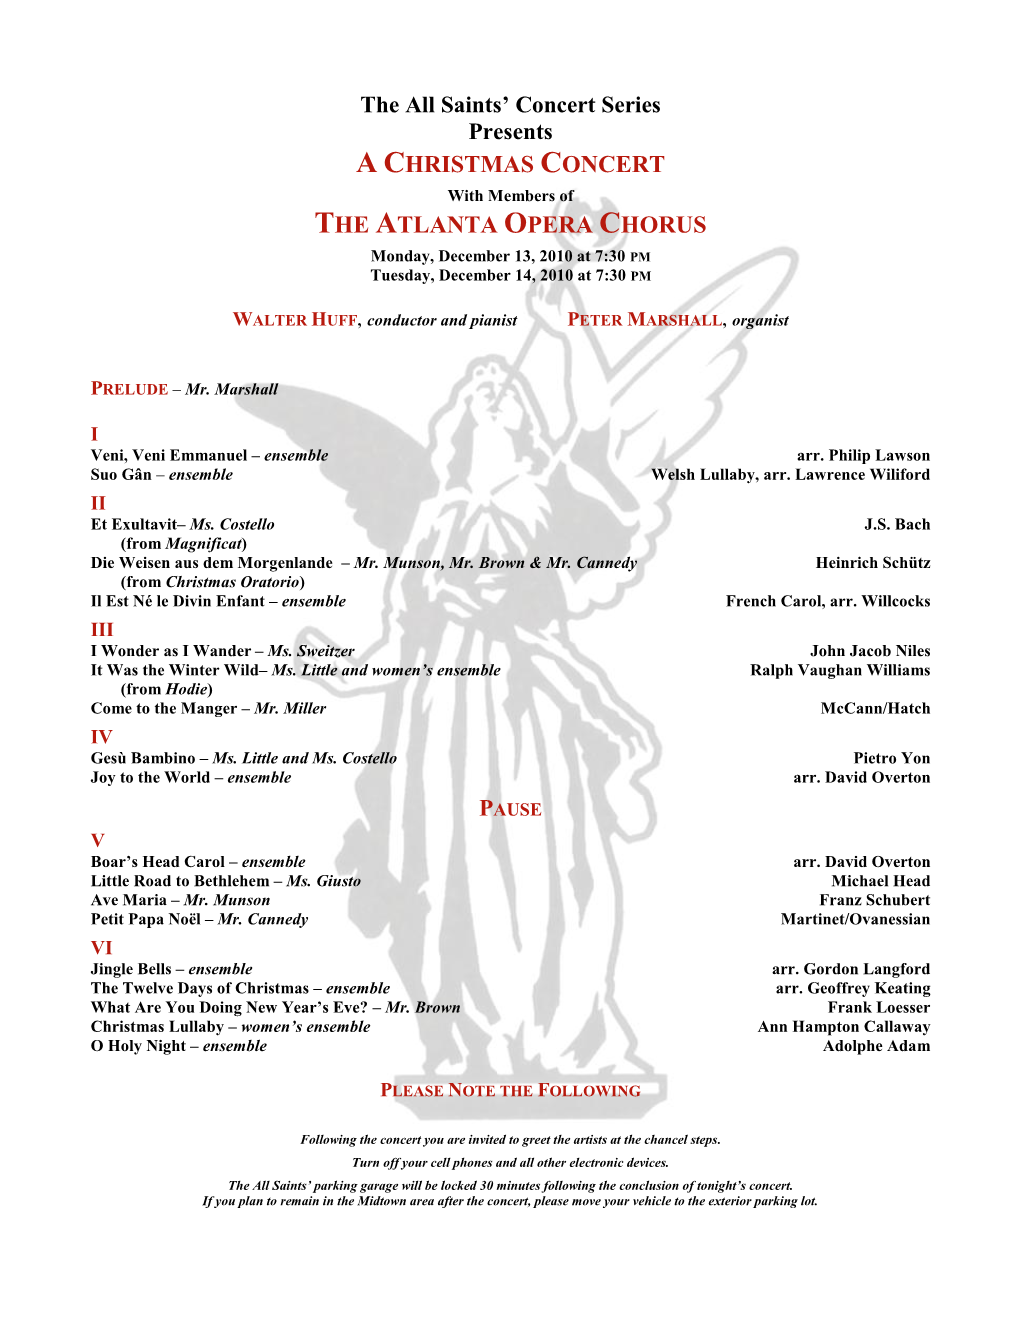 The All Saints' Concert Series Presents